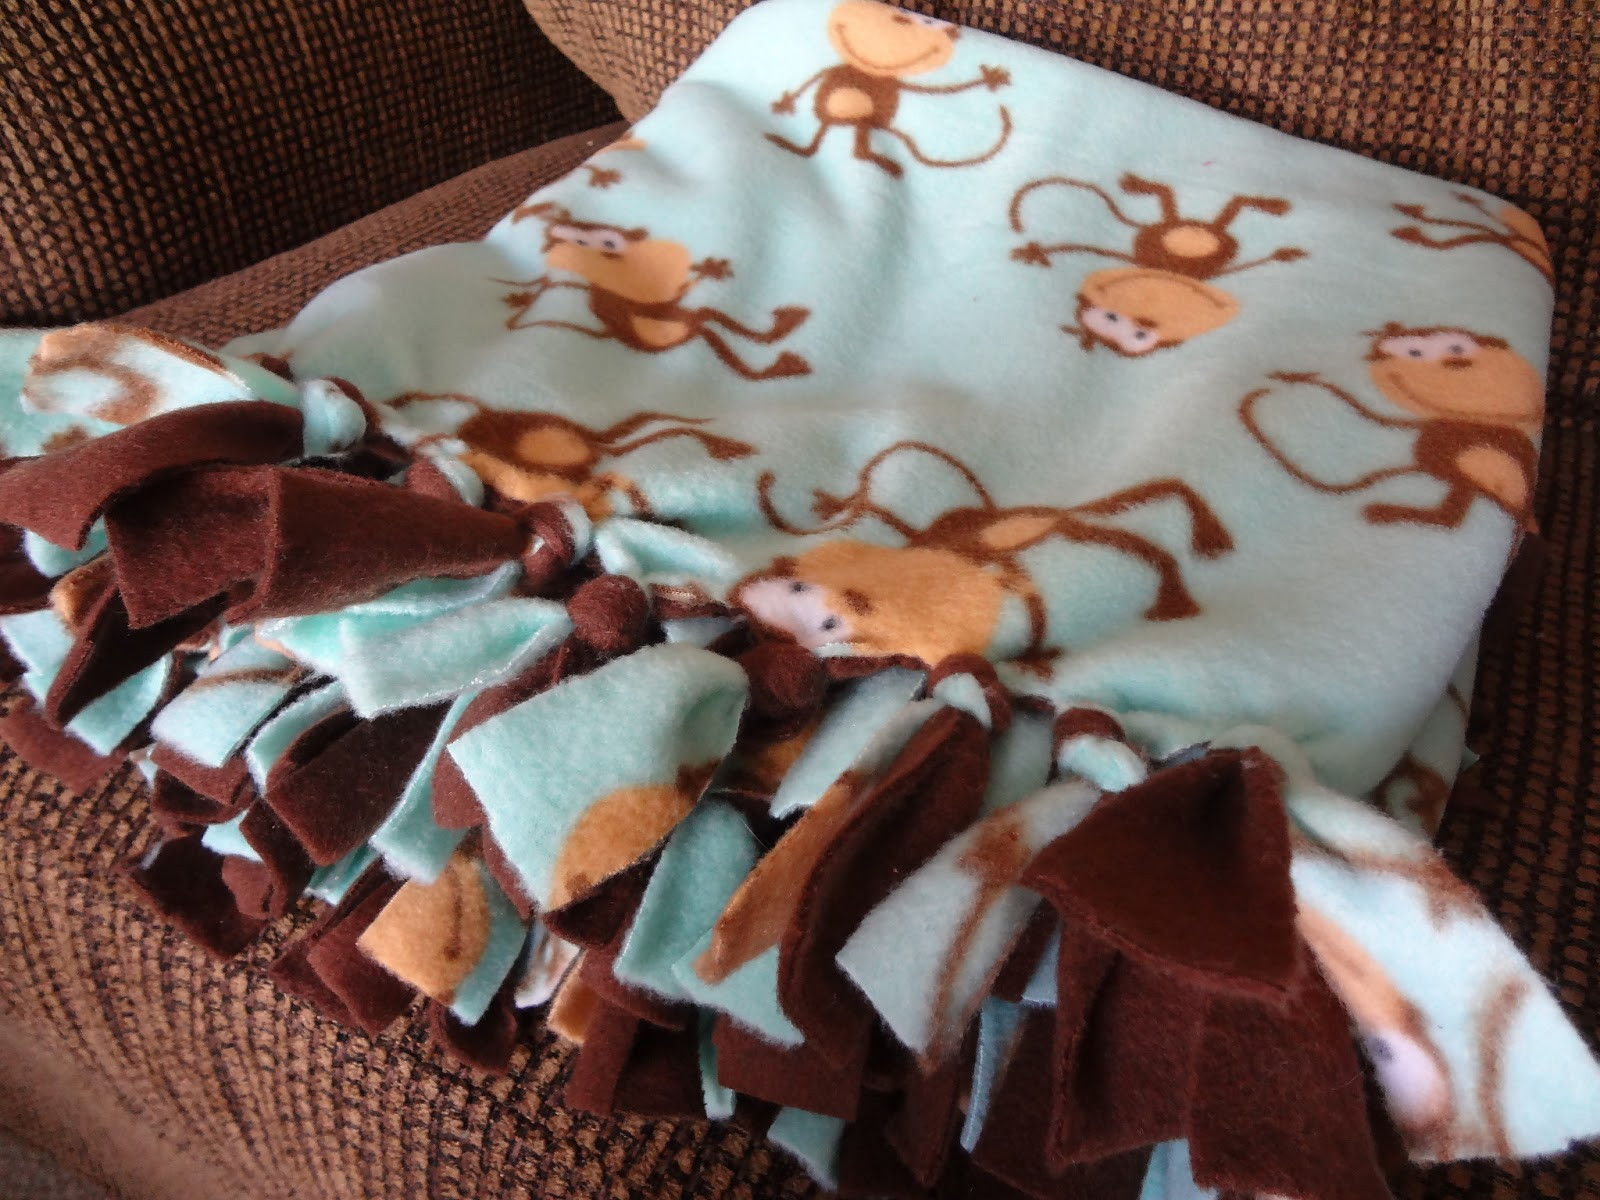 Best ideas about DIY Fleece Blanket
. Save or Pin The Busy Broad Easy DIY Fleece Tie Blanket Now.